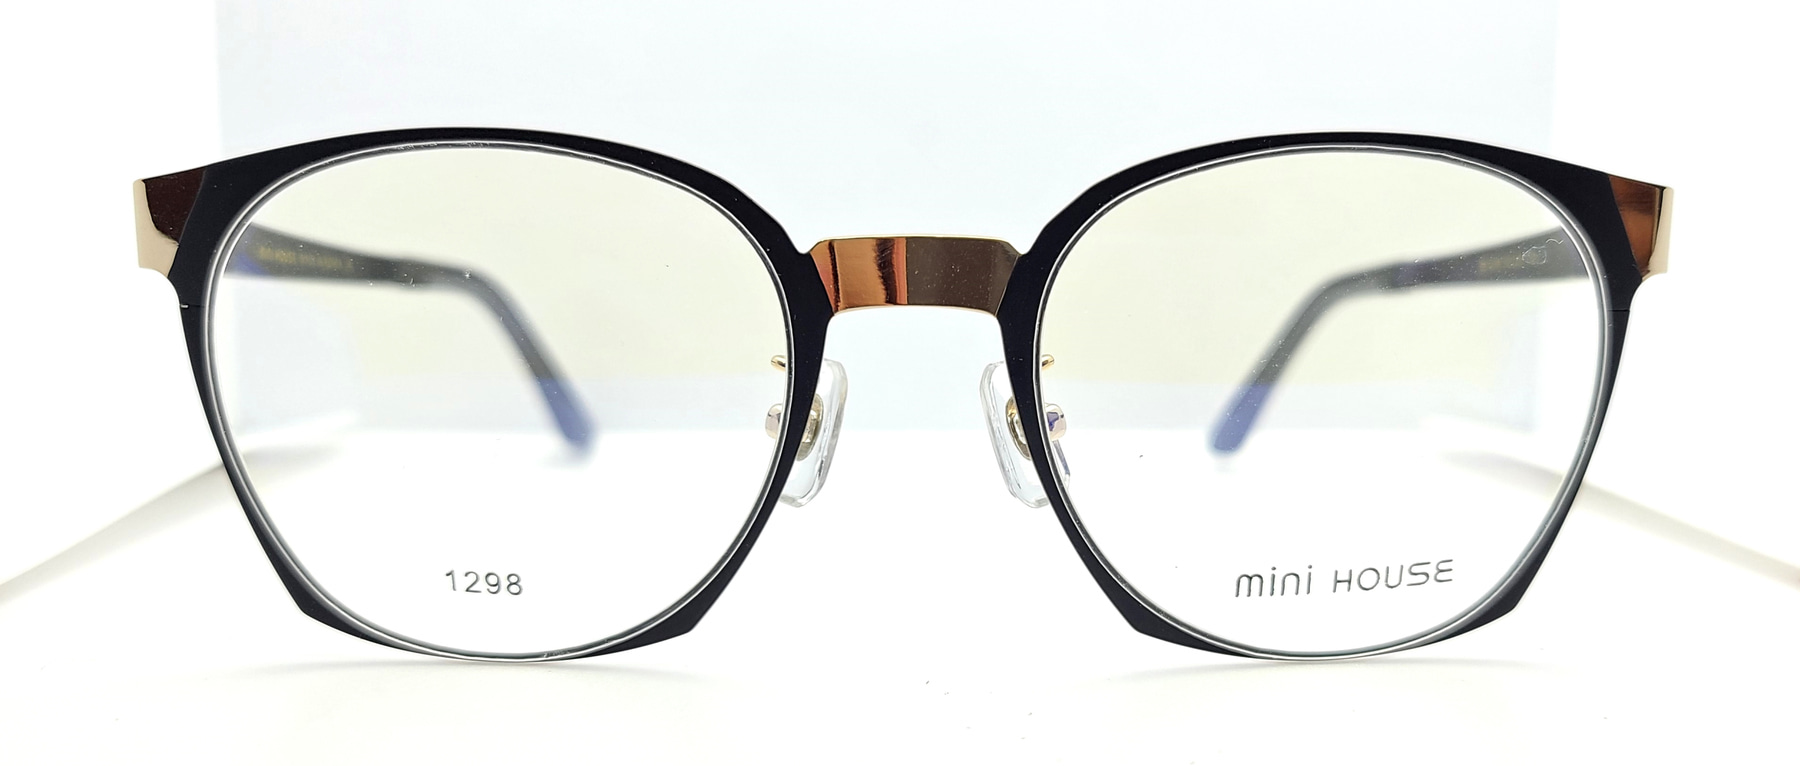 MINIHOUSE M-1298, Korean glasses, sunglasses, eyeglasses, glasses